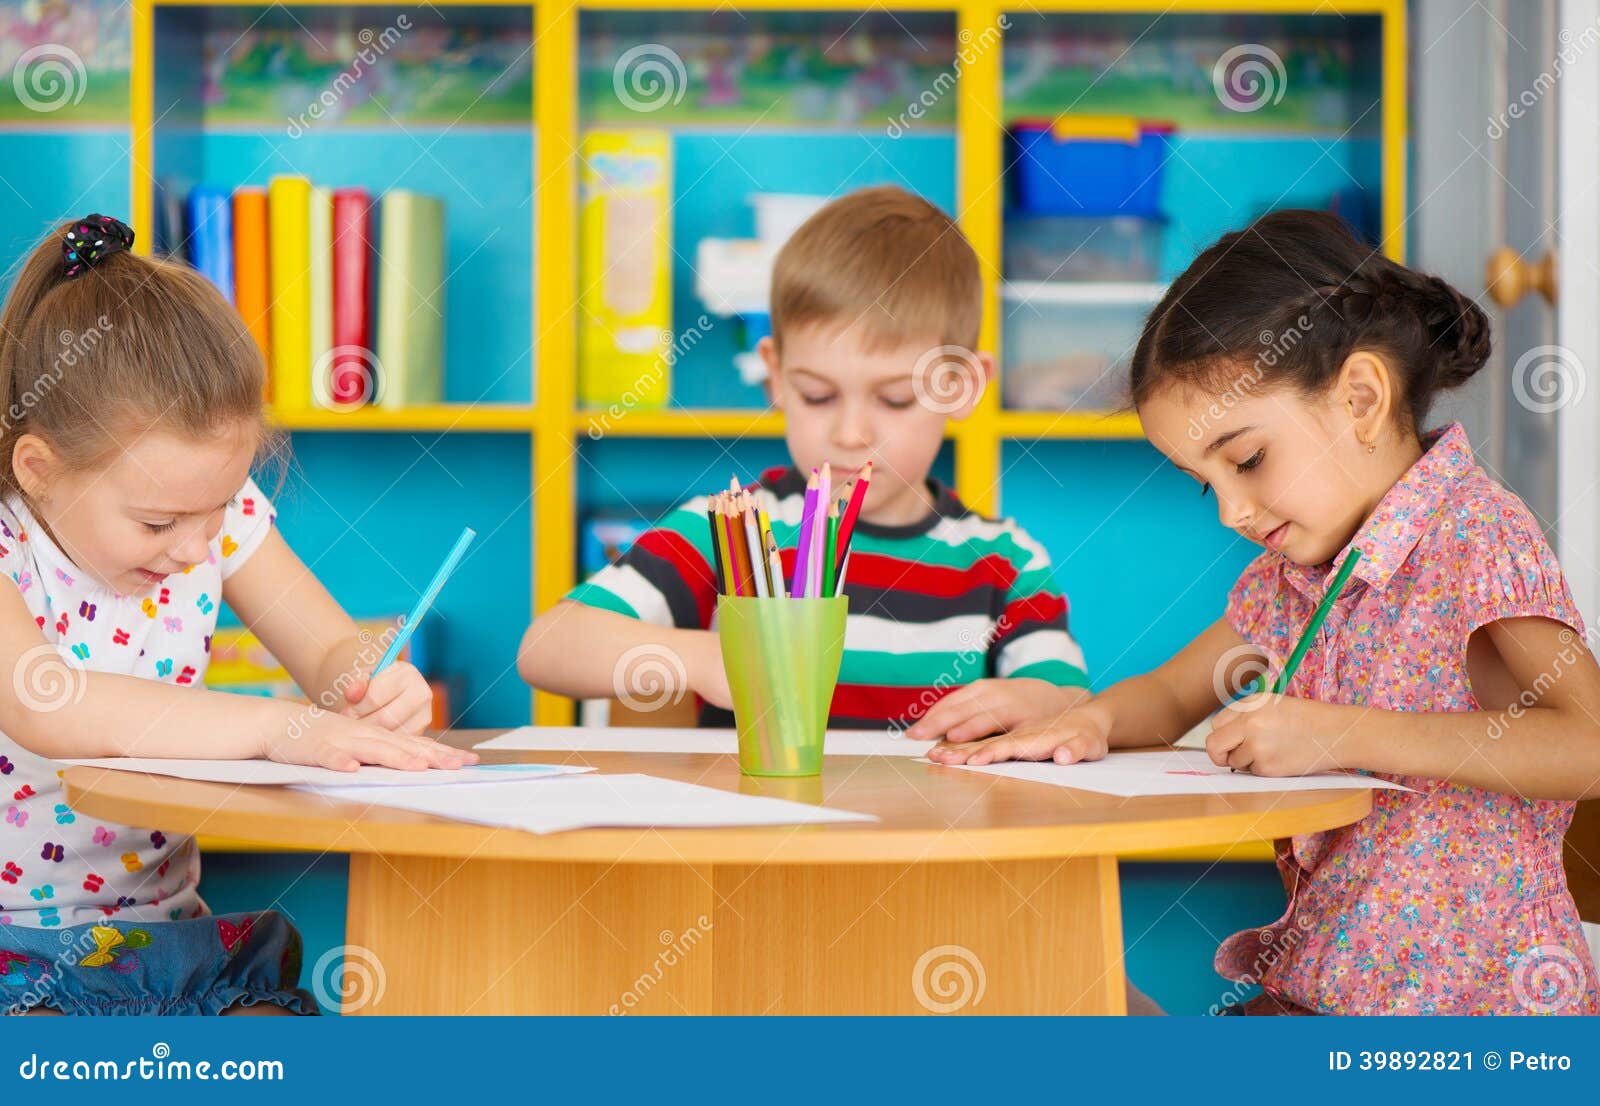 three preschool children drawing at daycare